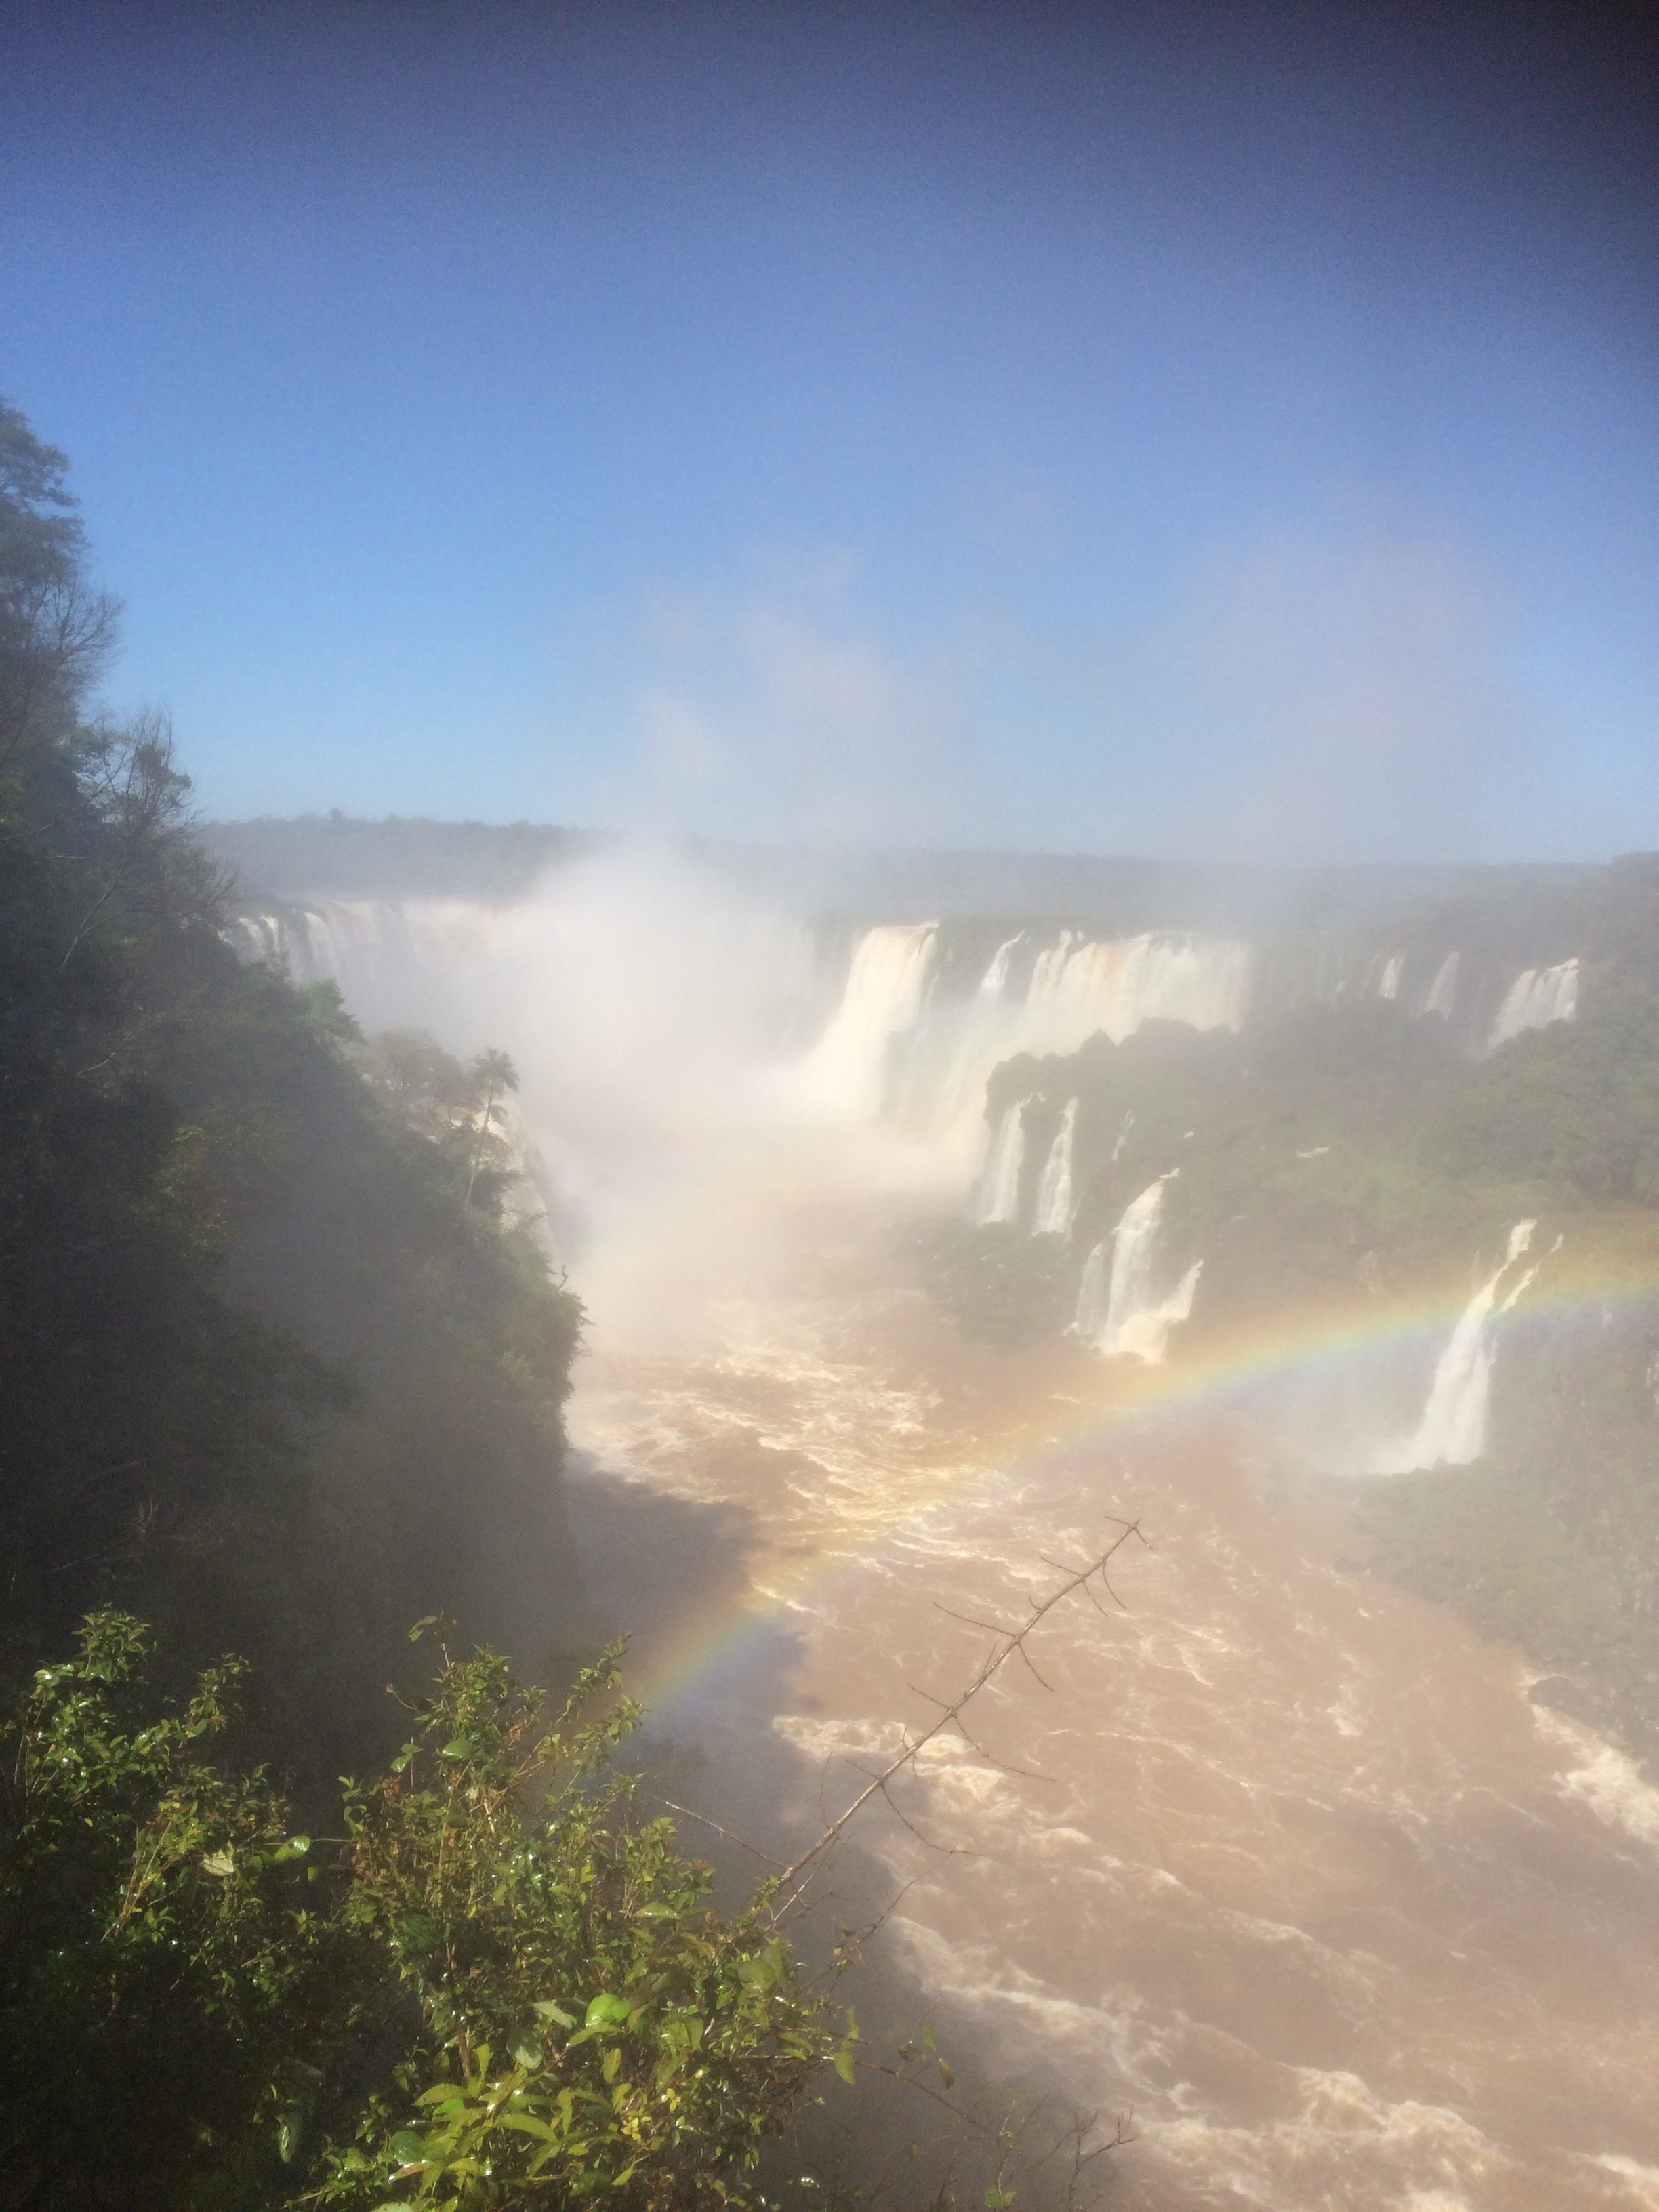 Iguazu Falls Rainbow